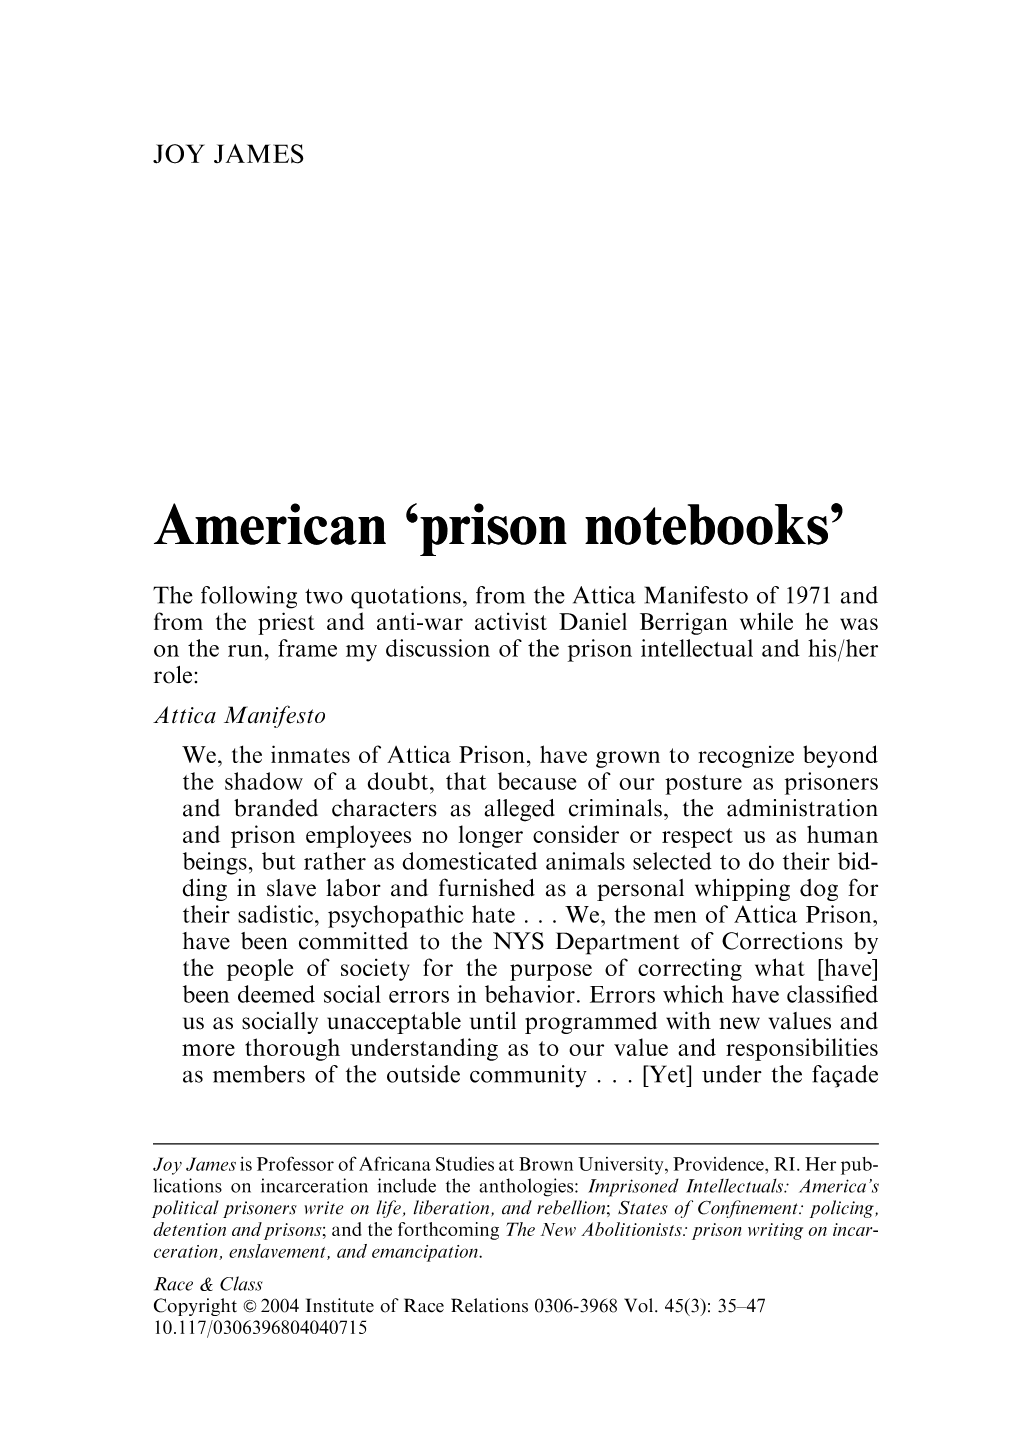 American 'Prison Notebooks'